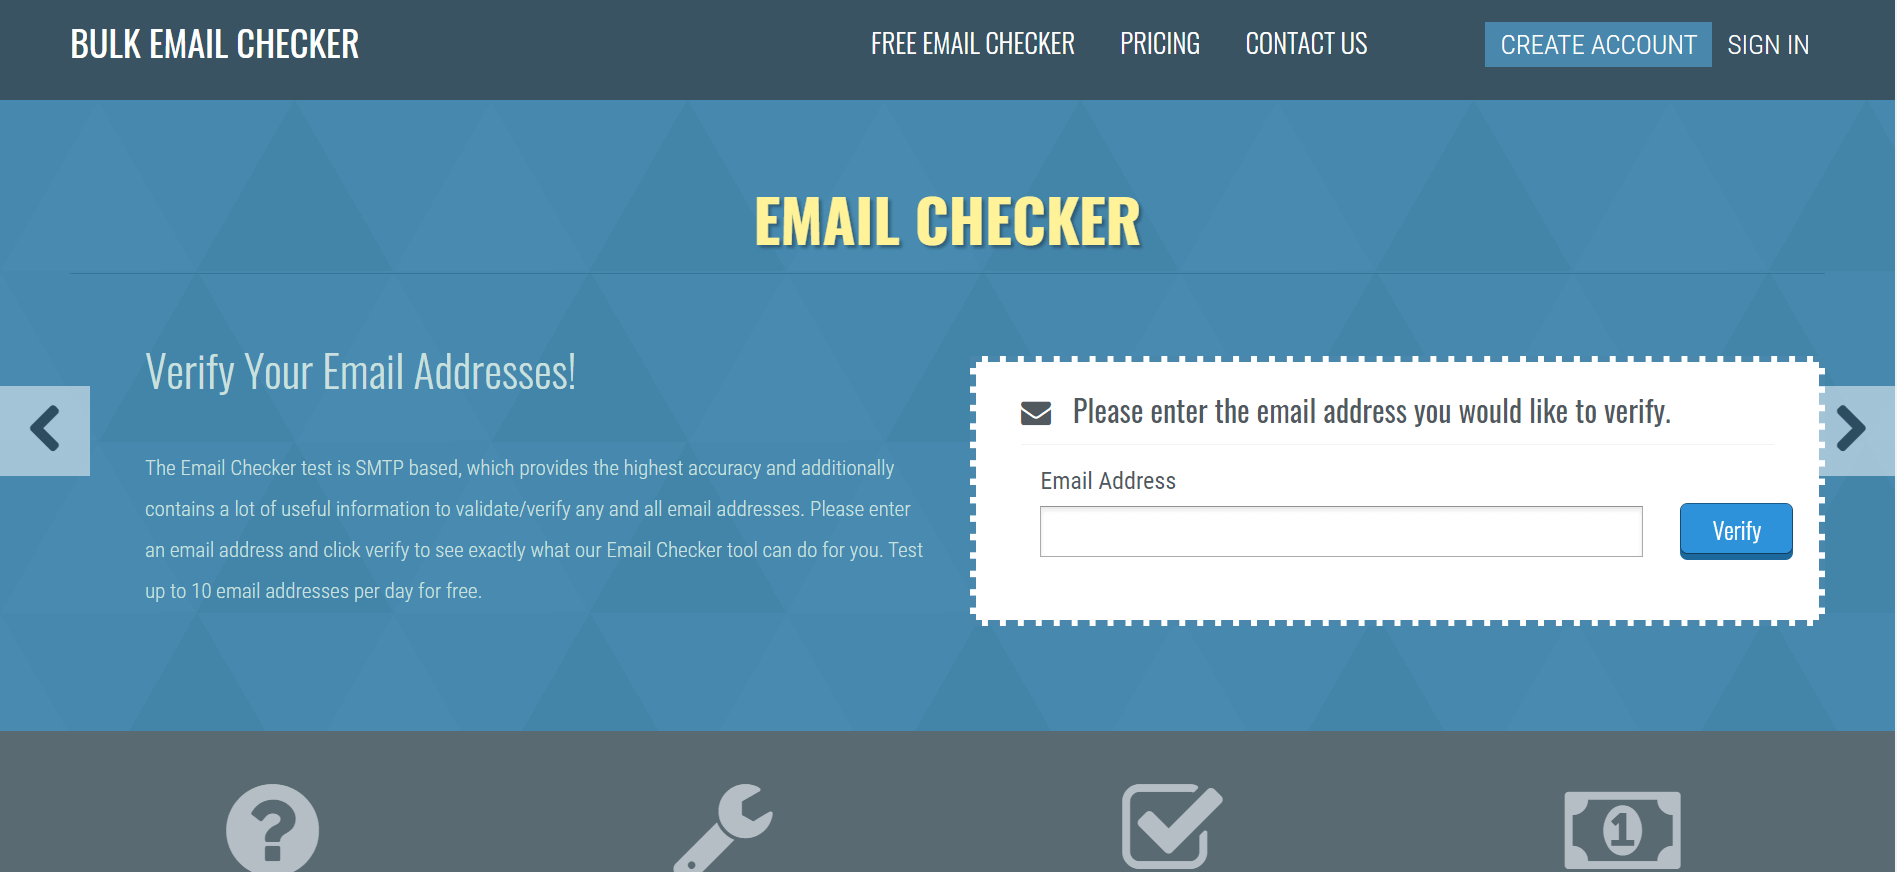 Bulk Email Checker